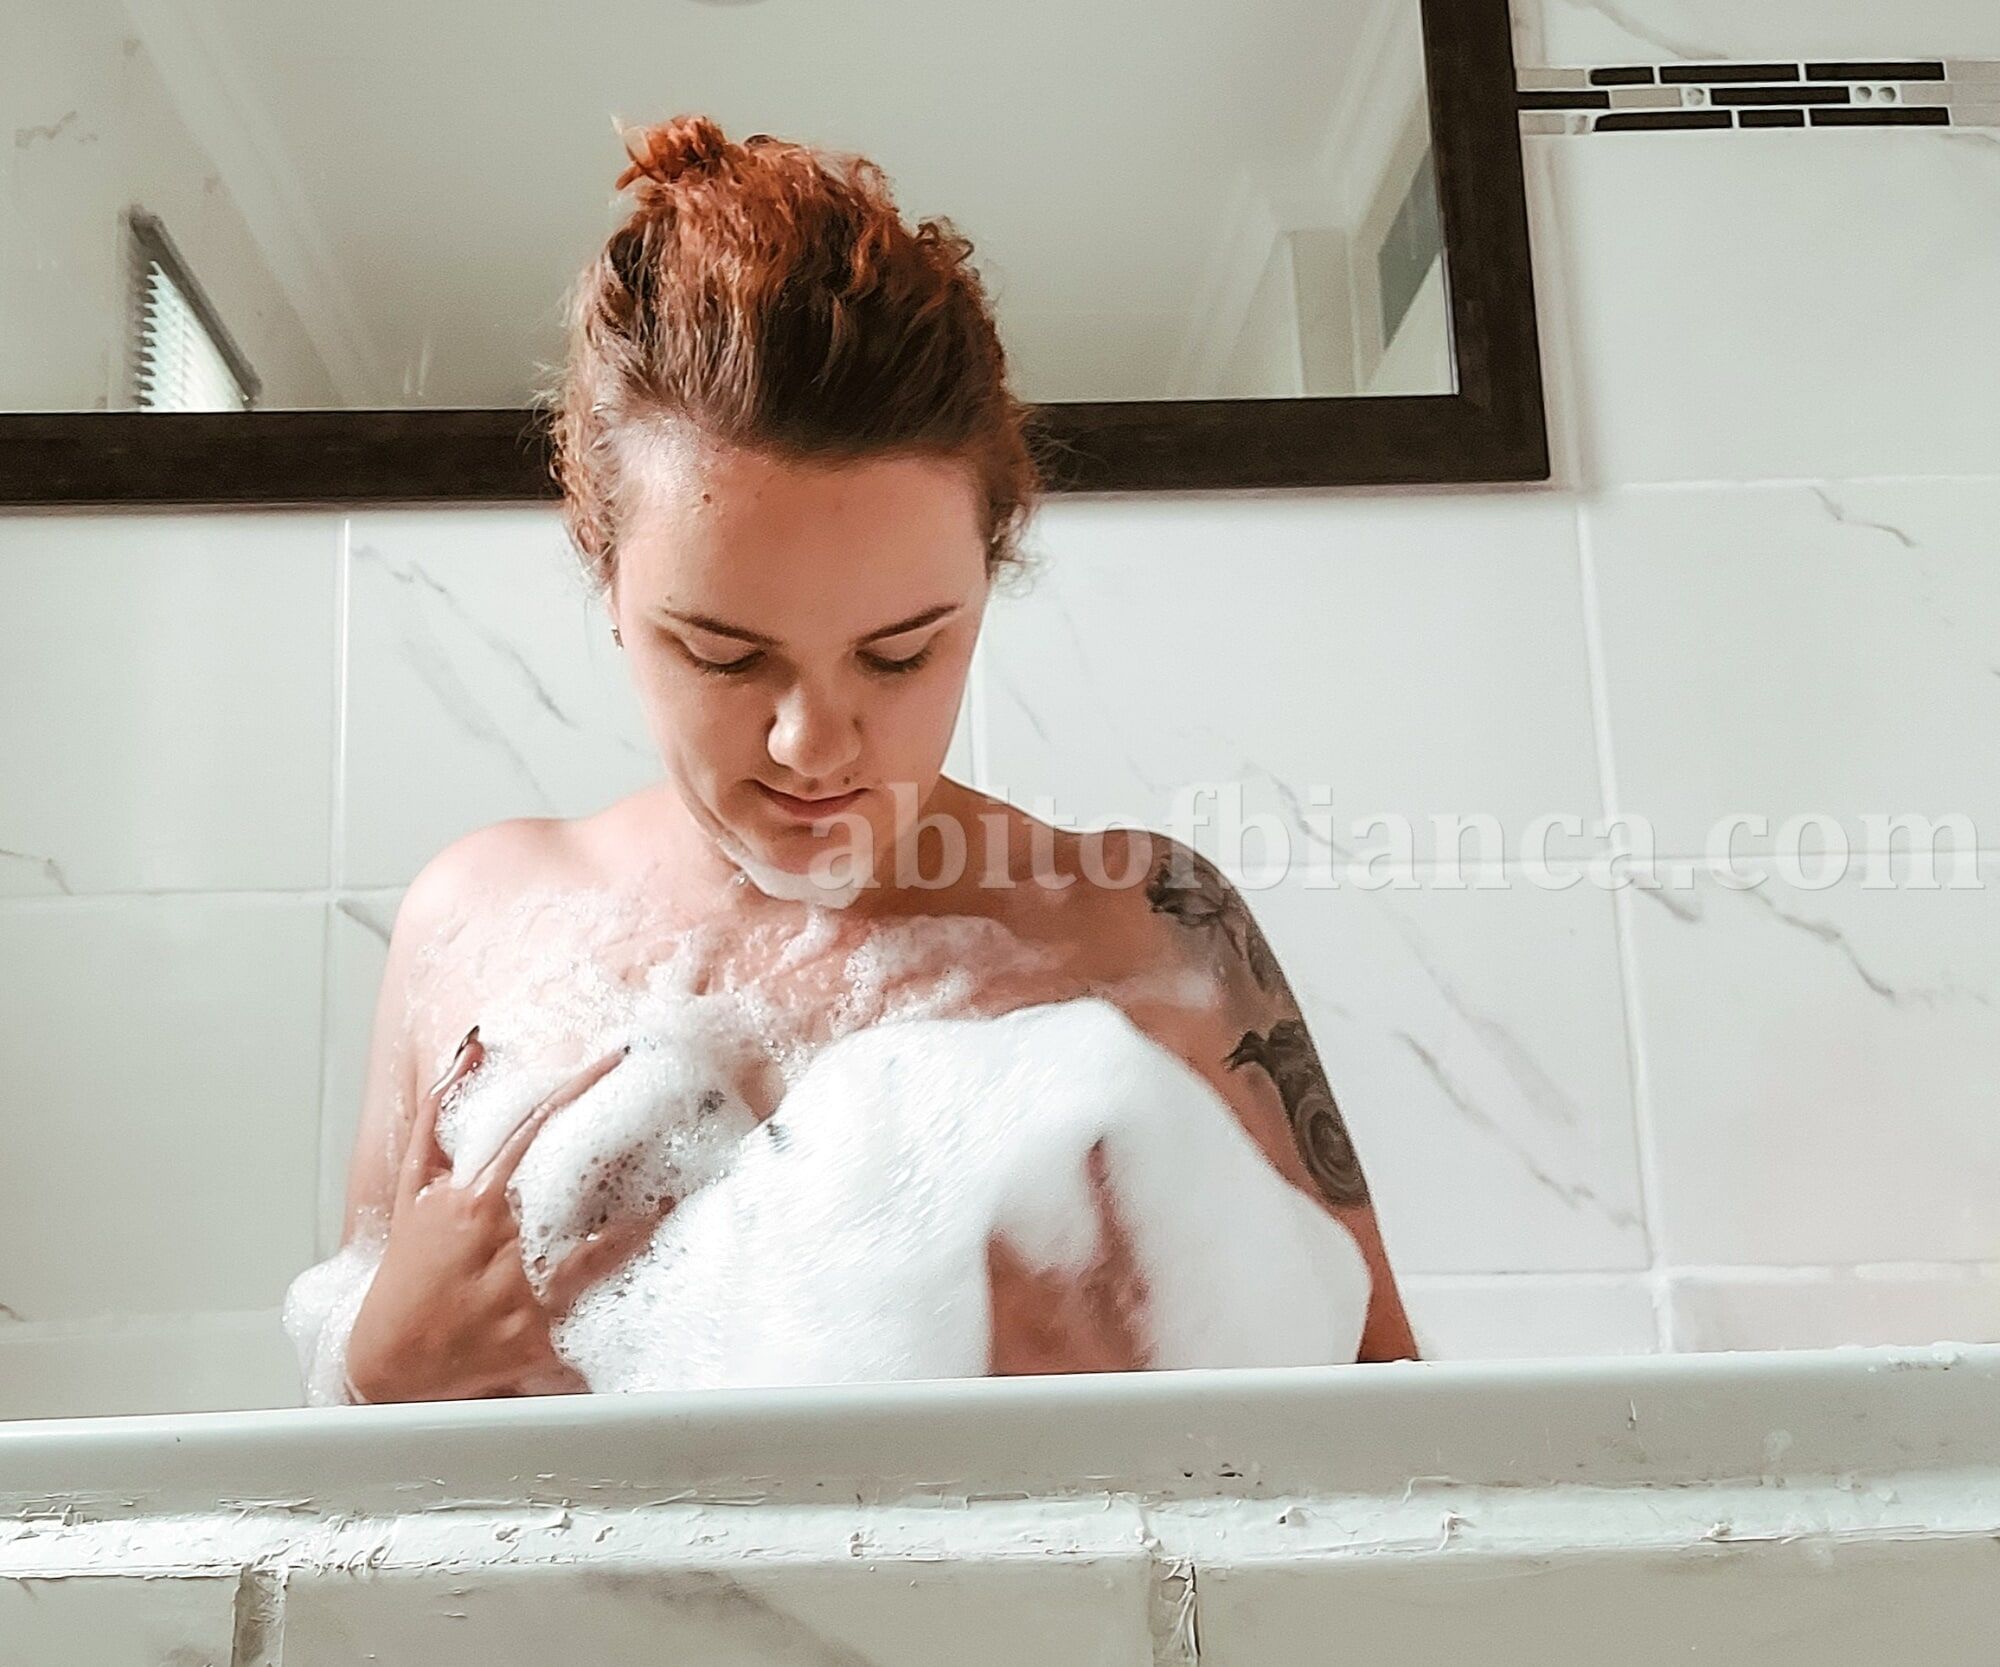 ABitofBianca hot tattooed redhead playing in a bubble bath #4